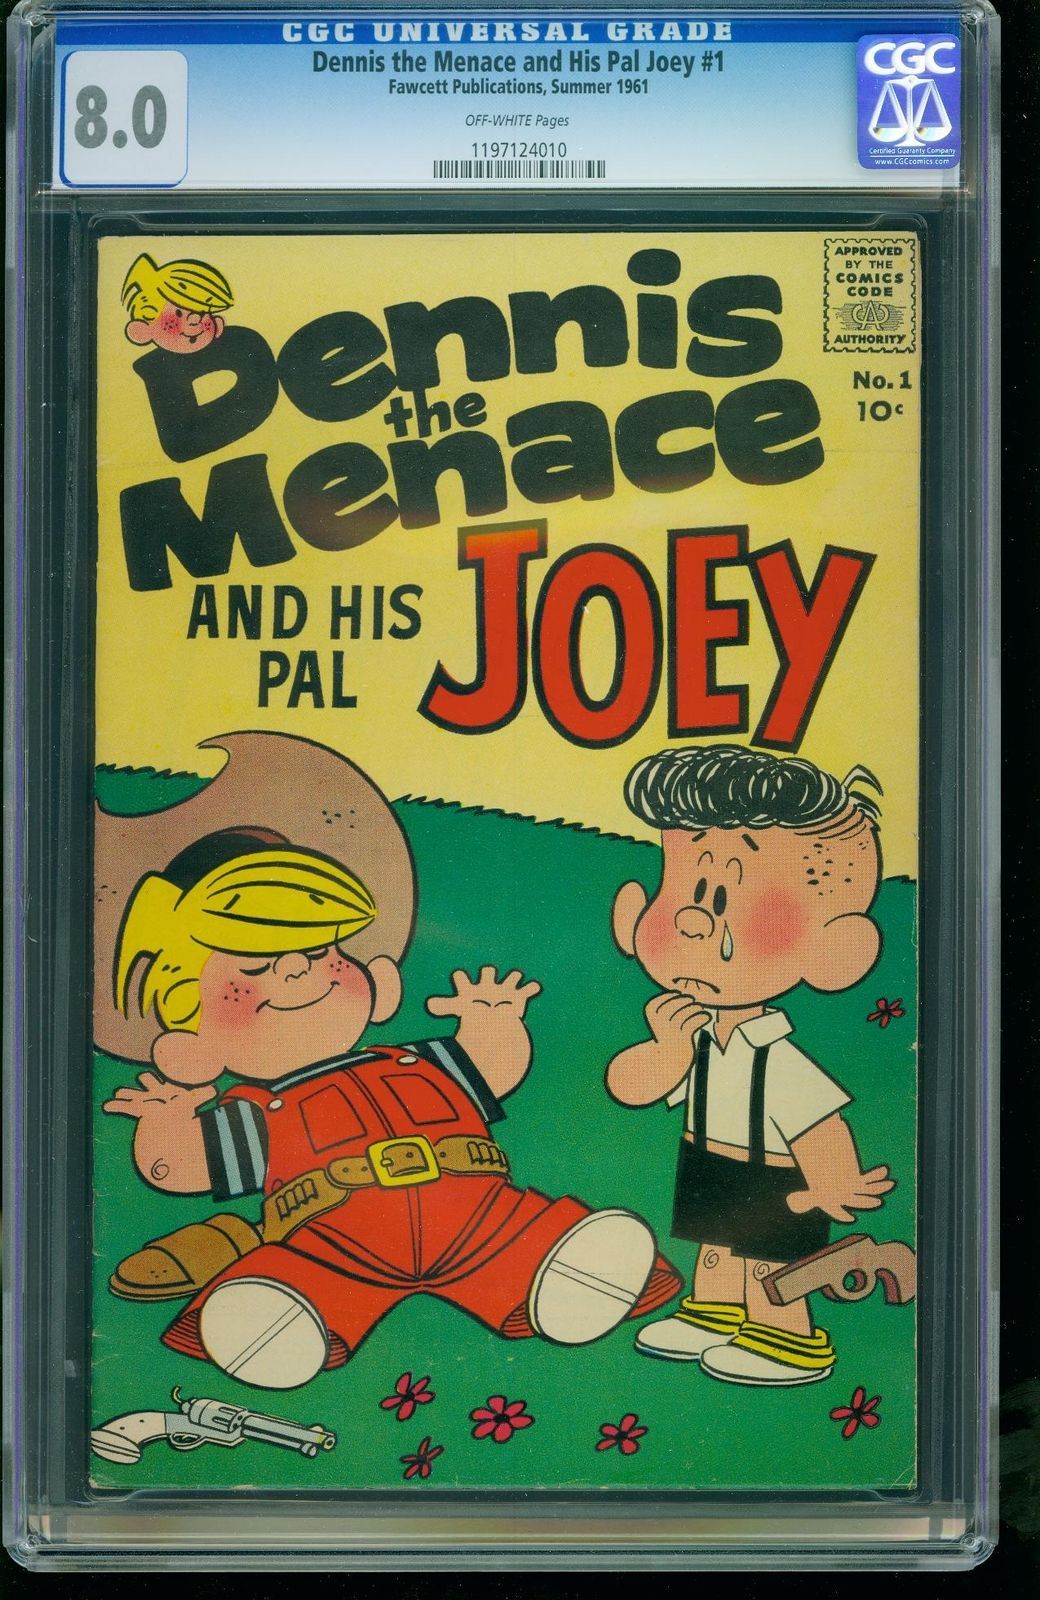 Dennis the menace joey